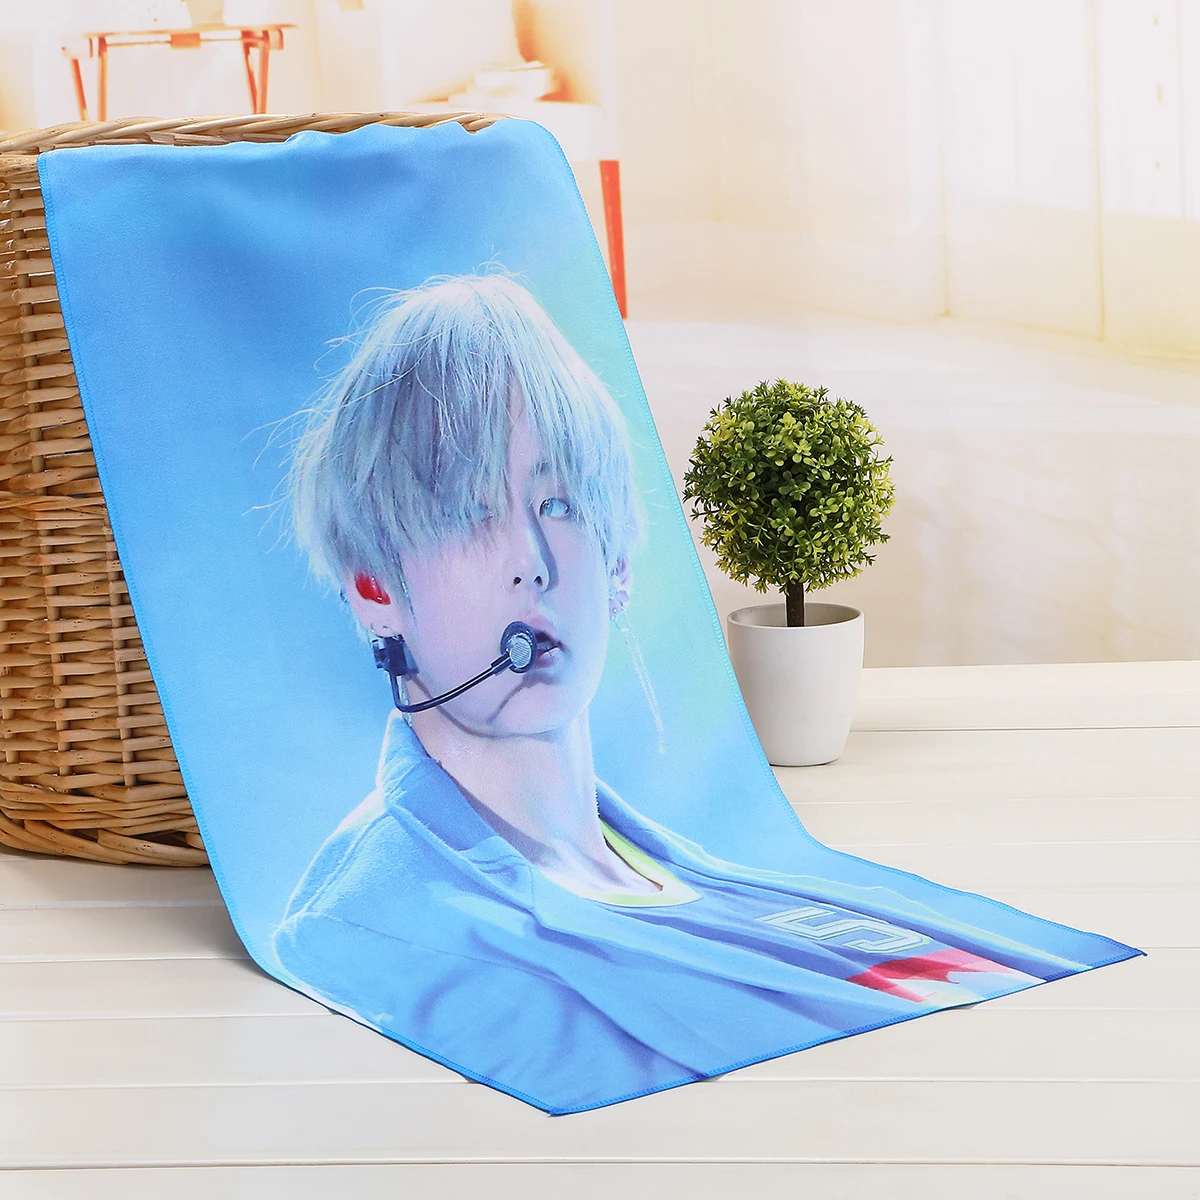 Hot Sale Microfiber Quick Dry Soft Comfortable Super Absorbent Customize Personalize Slogan Towel